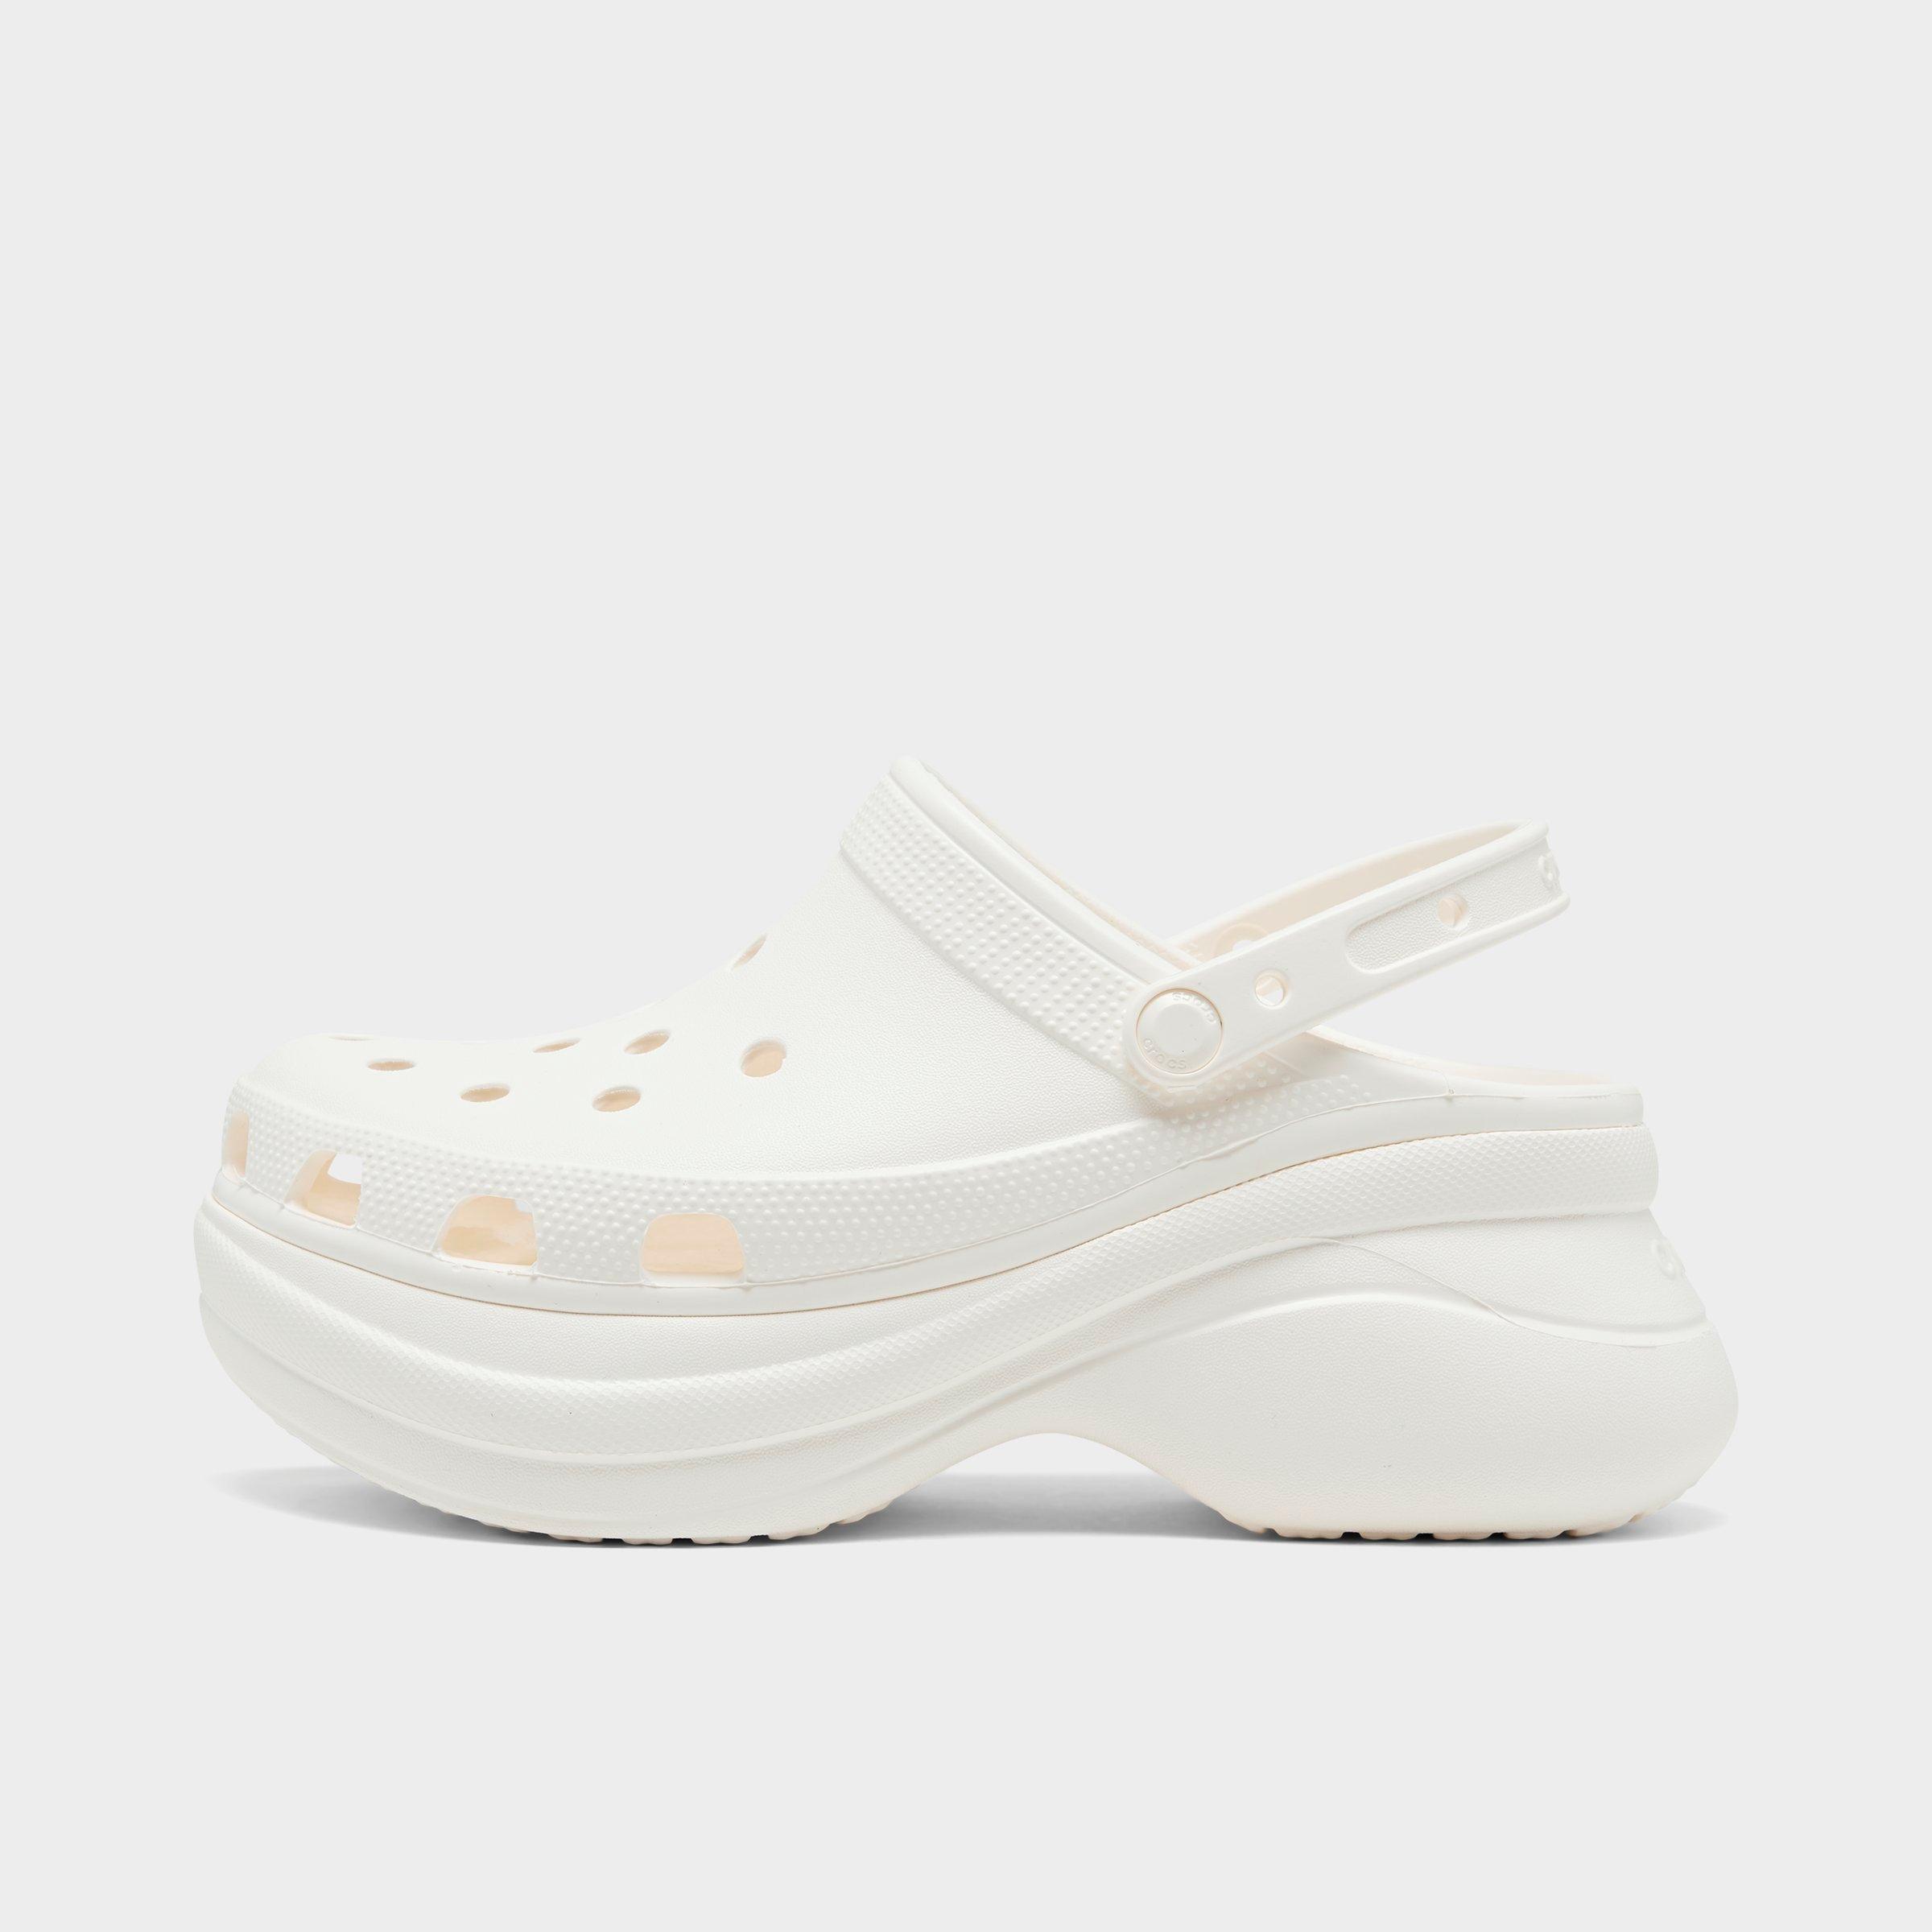 white clog shoes